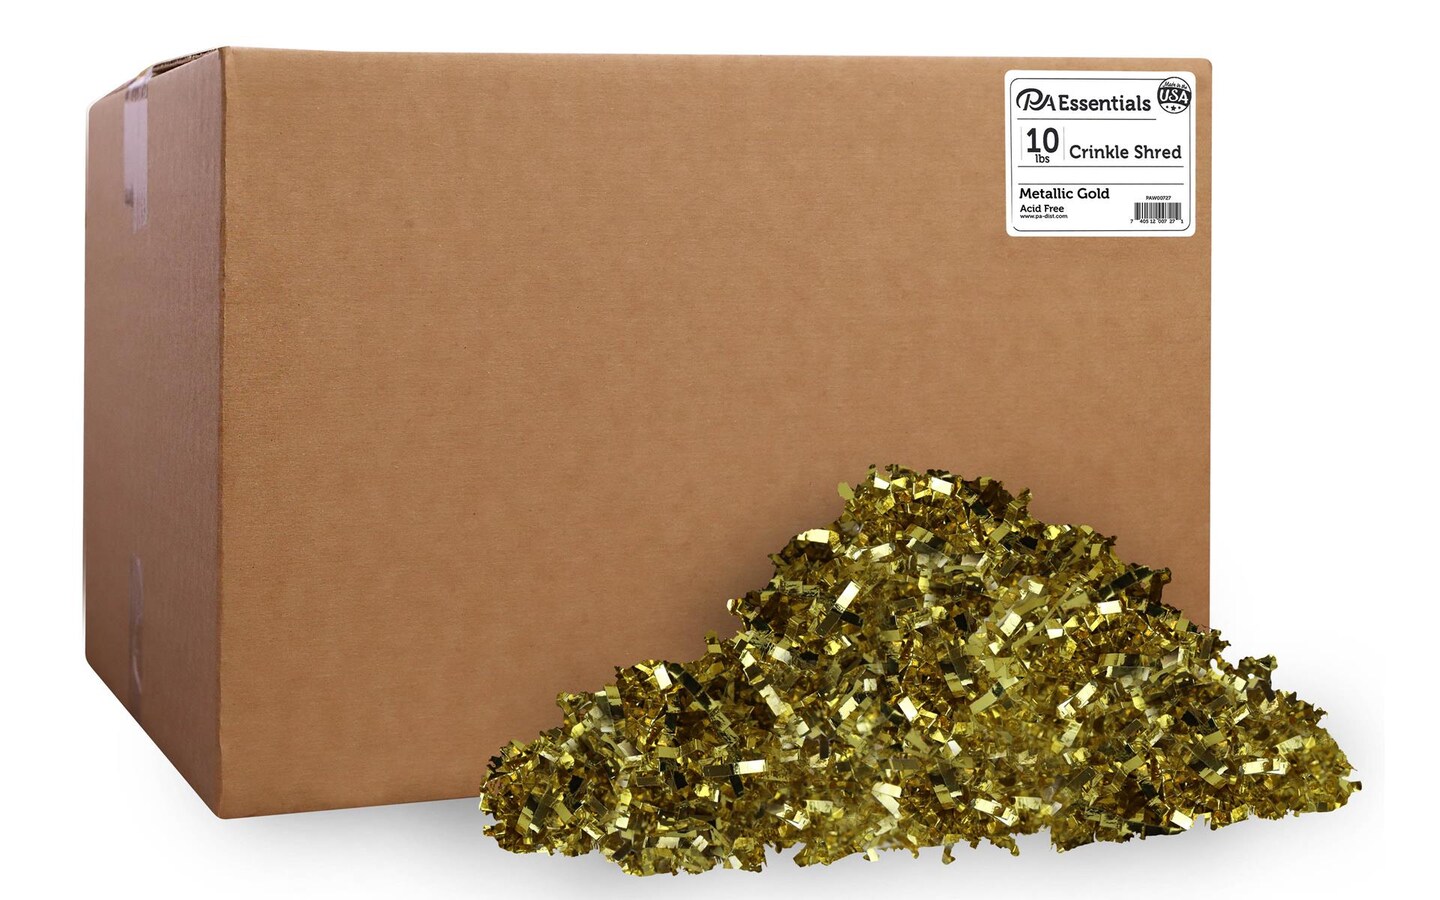 PA Ess Crinkle Shred Box 10lb Metallic Gold